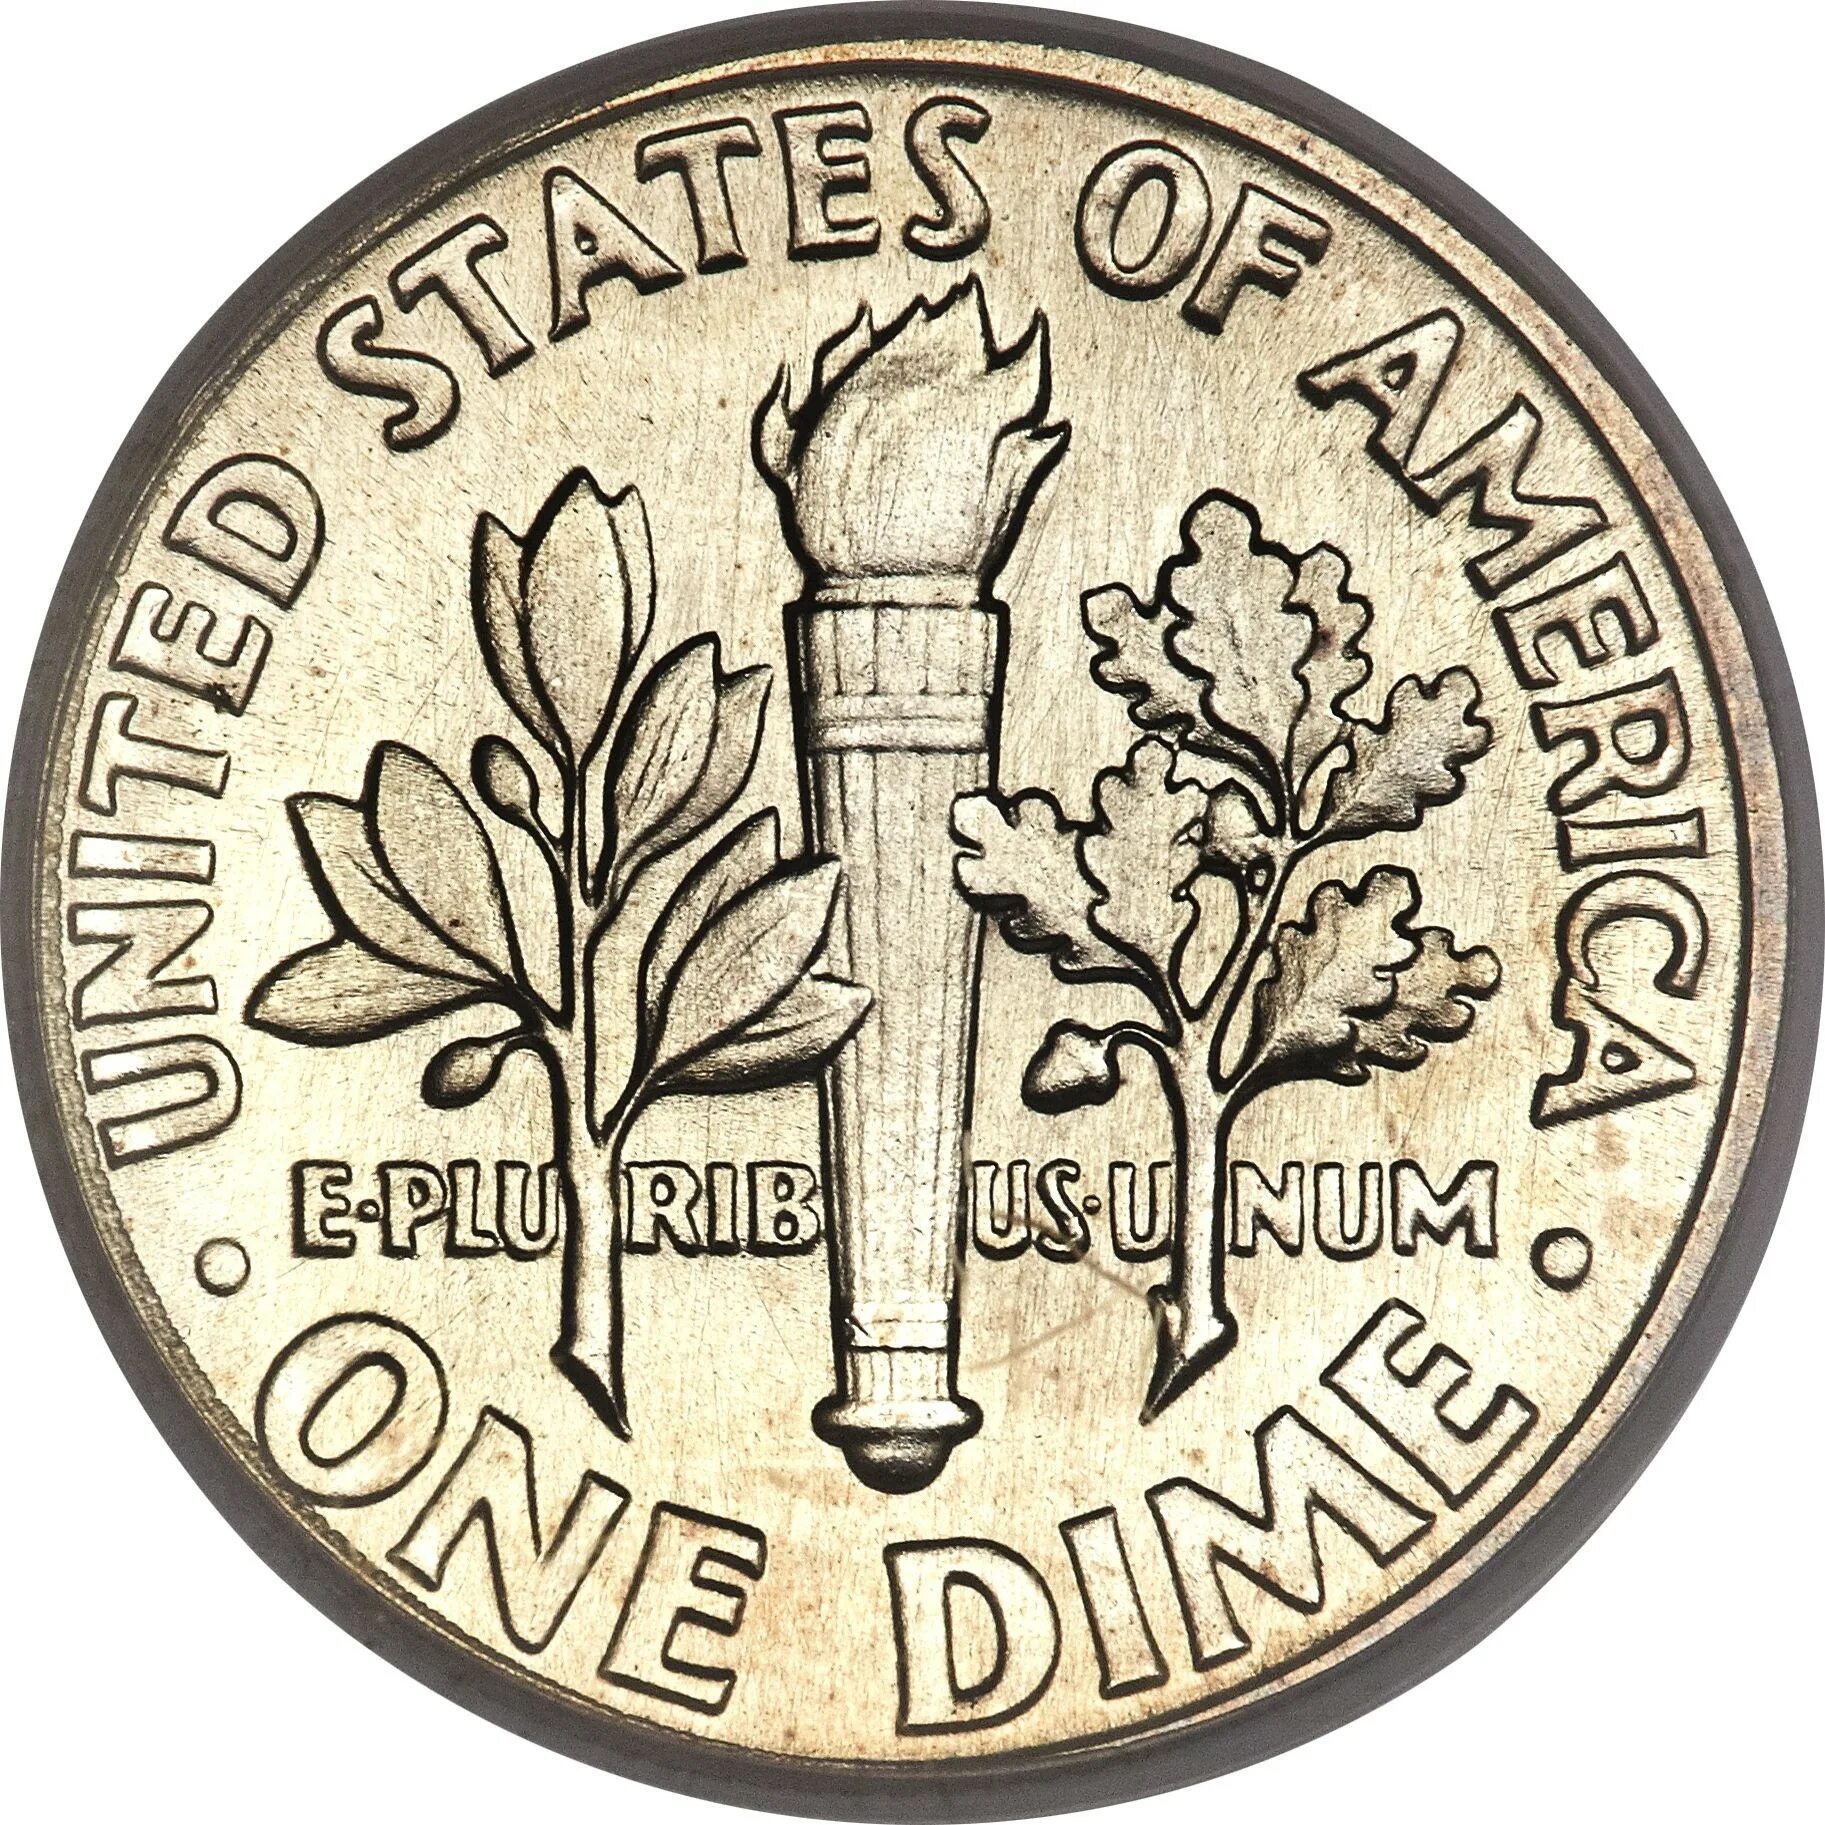 1 dine. Монета one Dime Liberty. Монета 1 дайм США. One Dime монета. Монета one Dime USA.